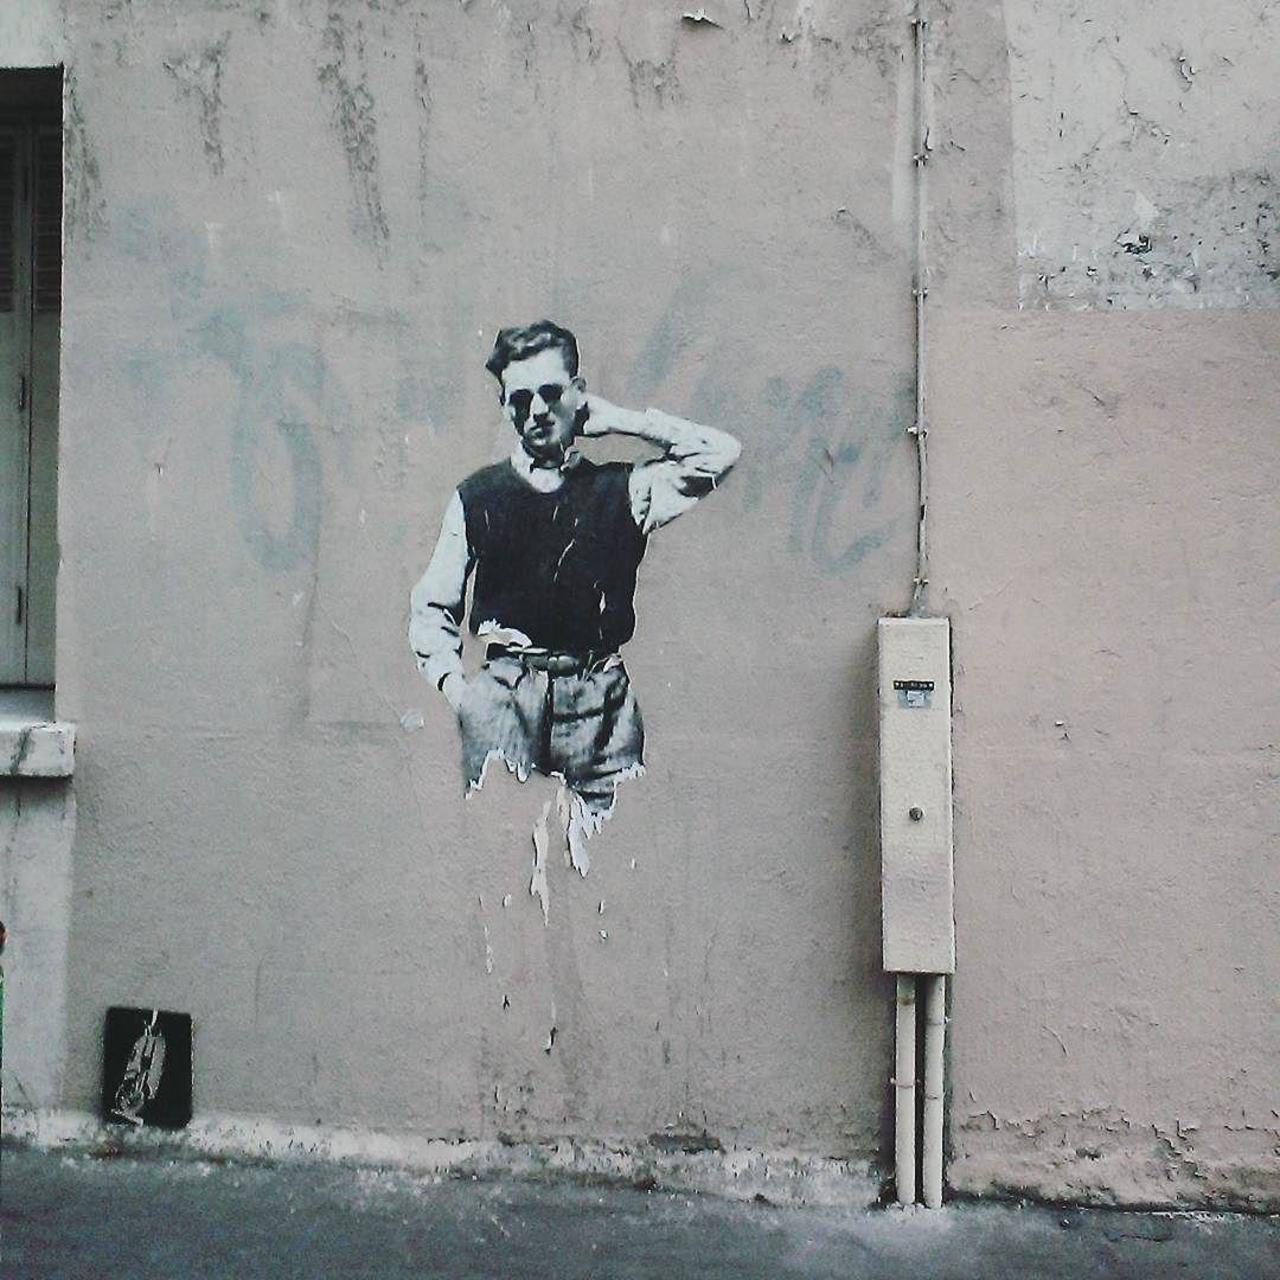 #Paris #graffiti photo by @mcwp http://ift.tt/1gXaooo #StreetArt http://t.co/F9ZzNmvDEA